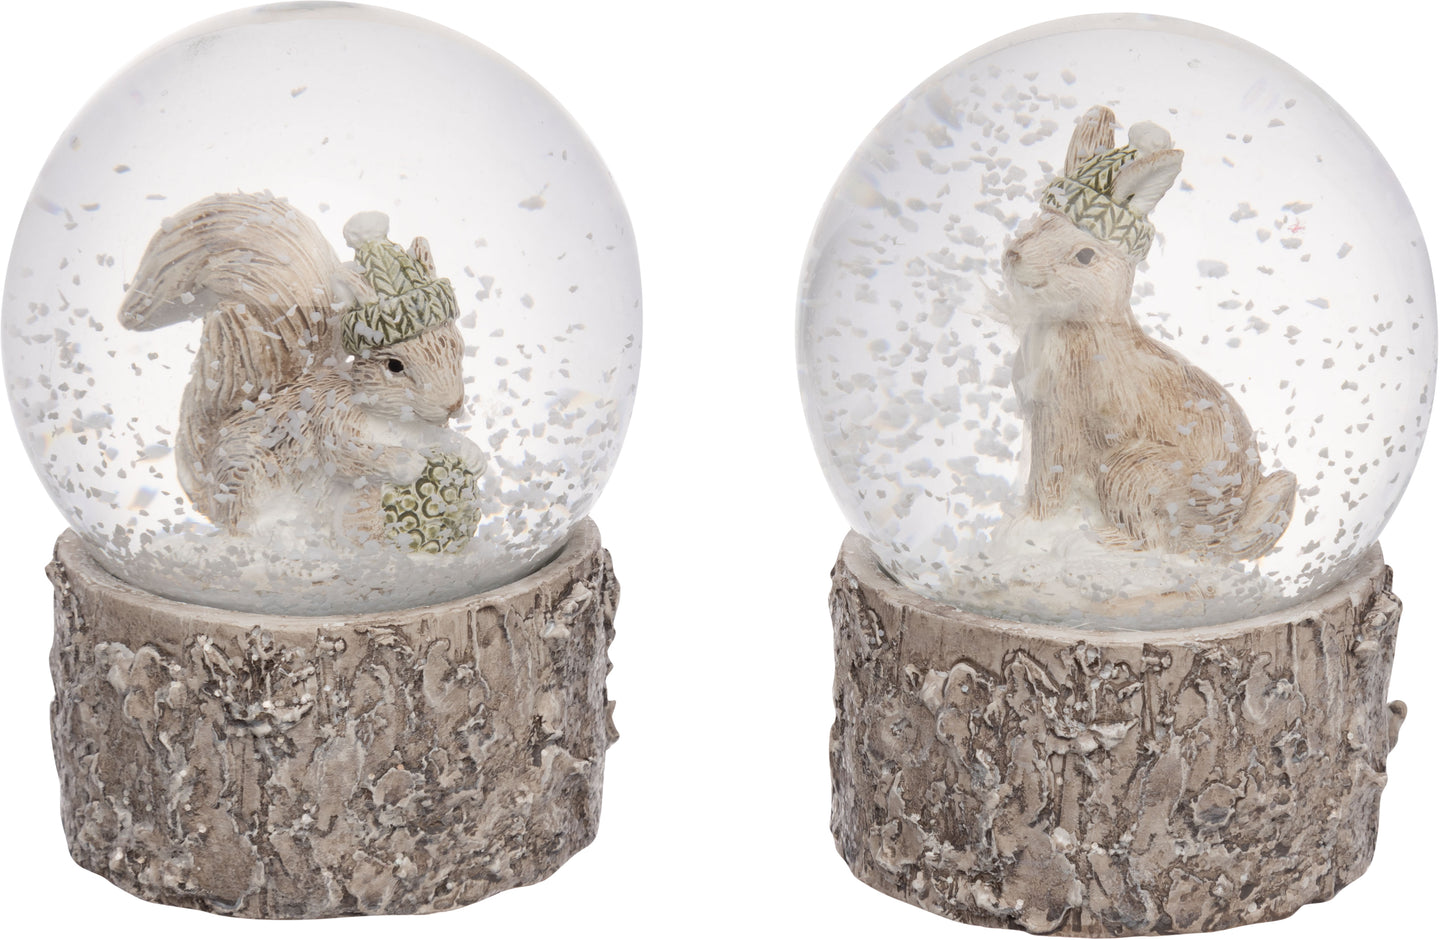 Winter Animals in Hats Snow globes